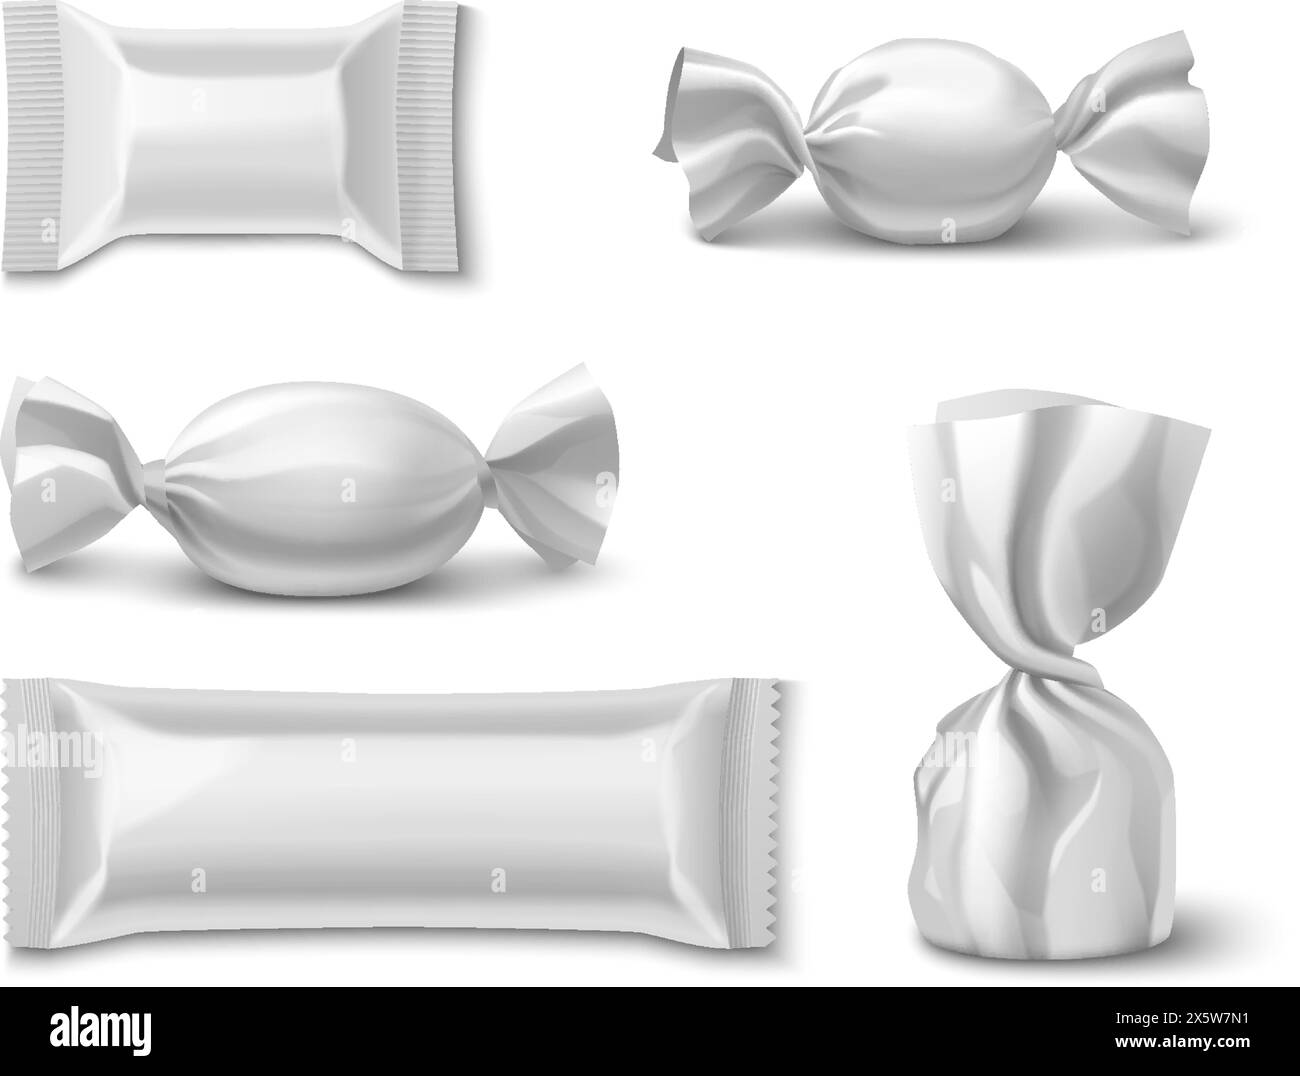 3D Süßschokolade Geschenkverpackung Mockup. Leere weiße, realistische Twist Pack-Verpackung für Bar-, Bonbon-, Keks- oder Karamellwaren d Stock Vektor